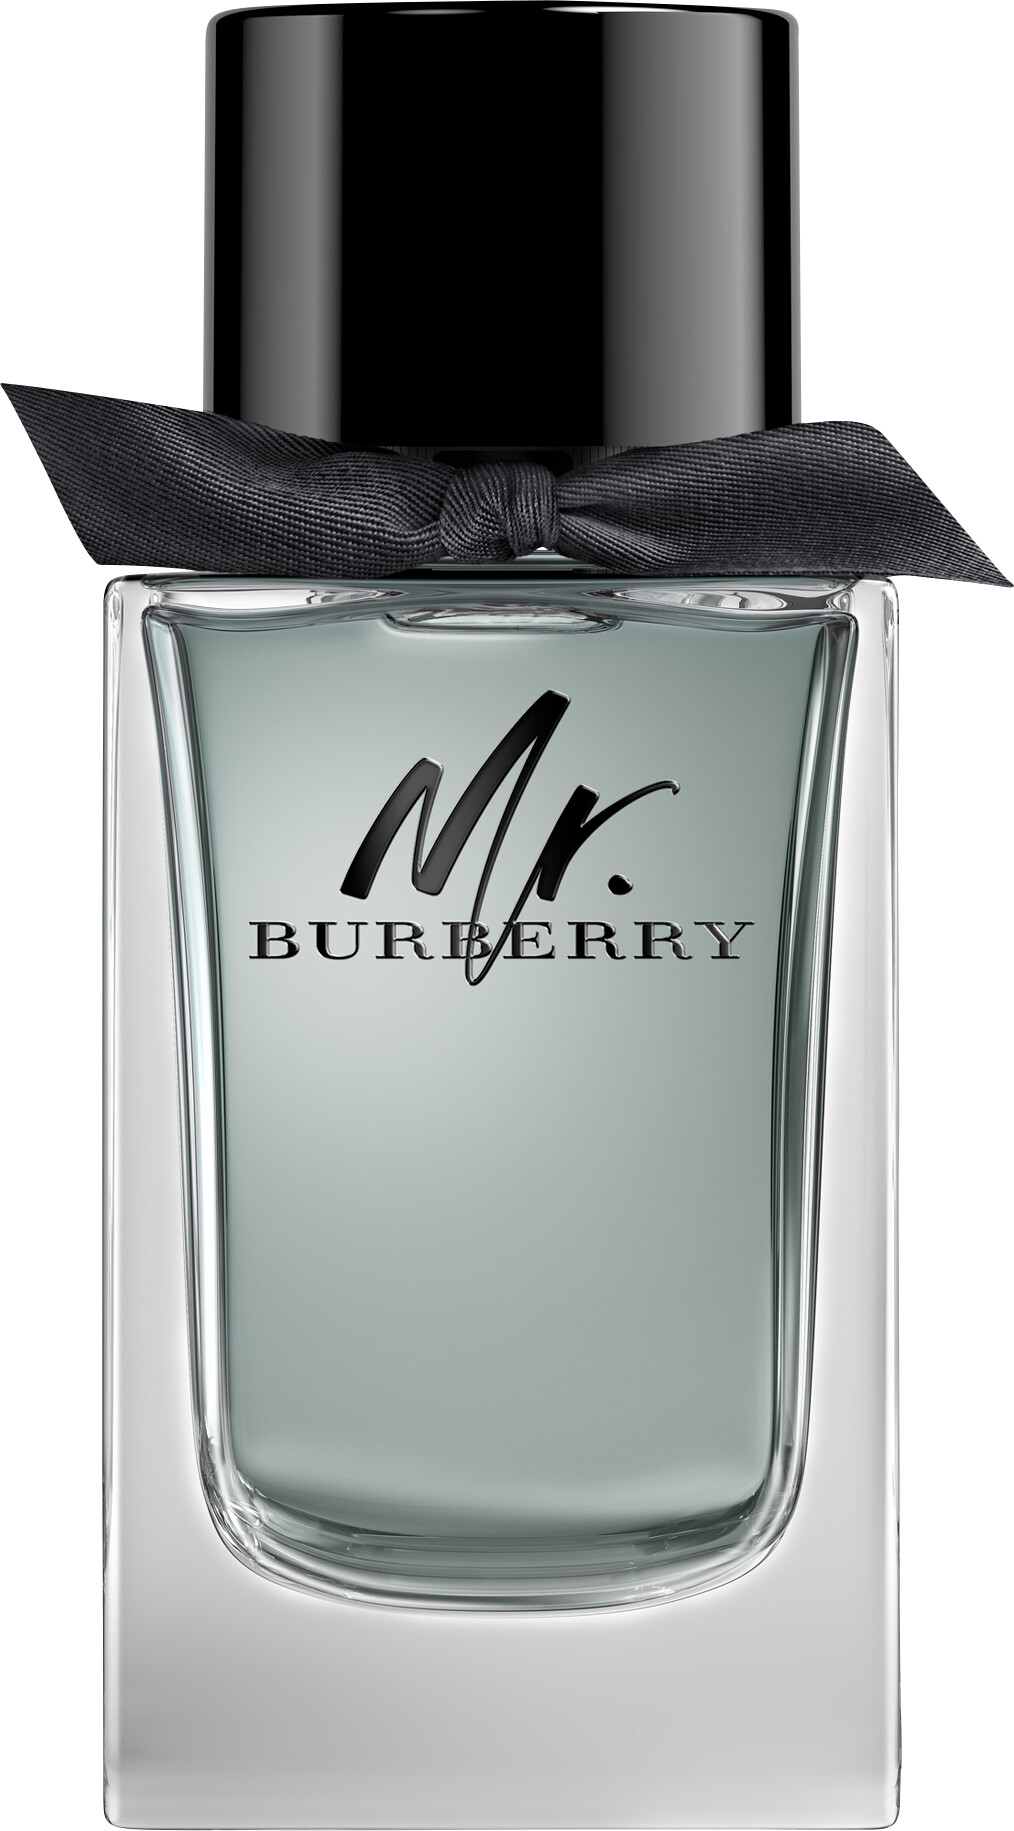 BURBERRY Mr BURBERRY Eau de Toilette Spray 150ml